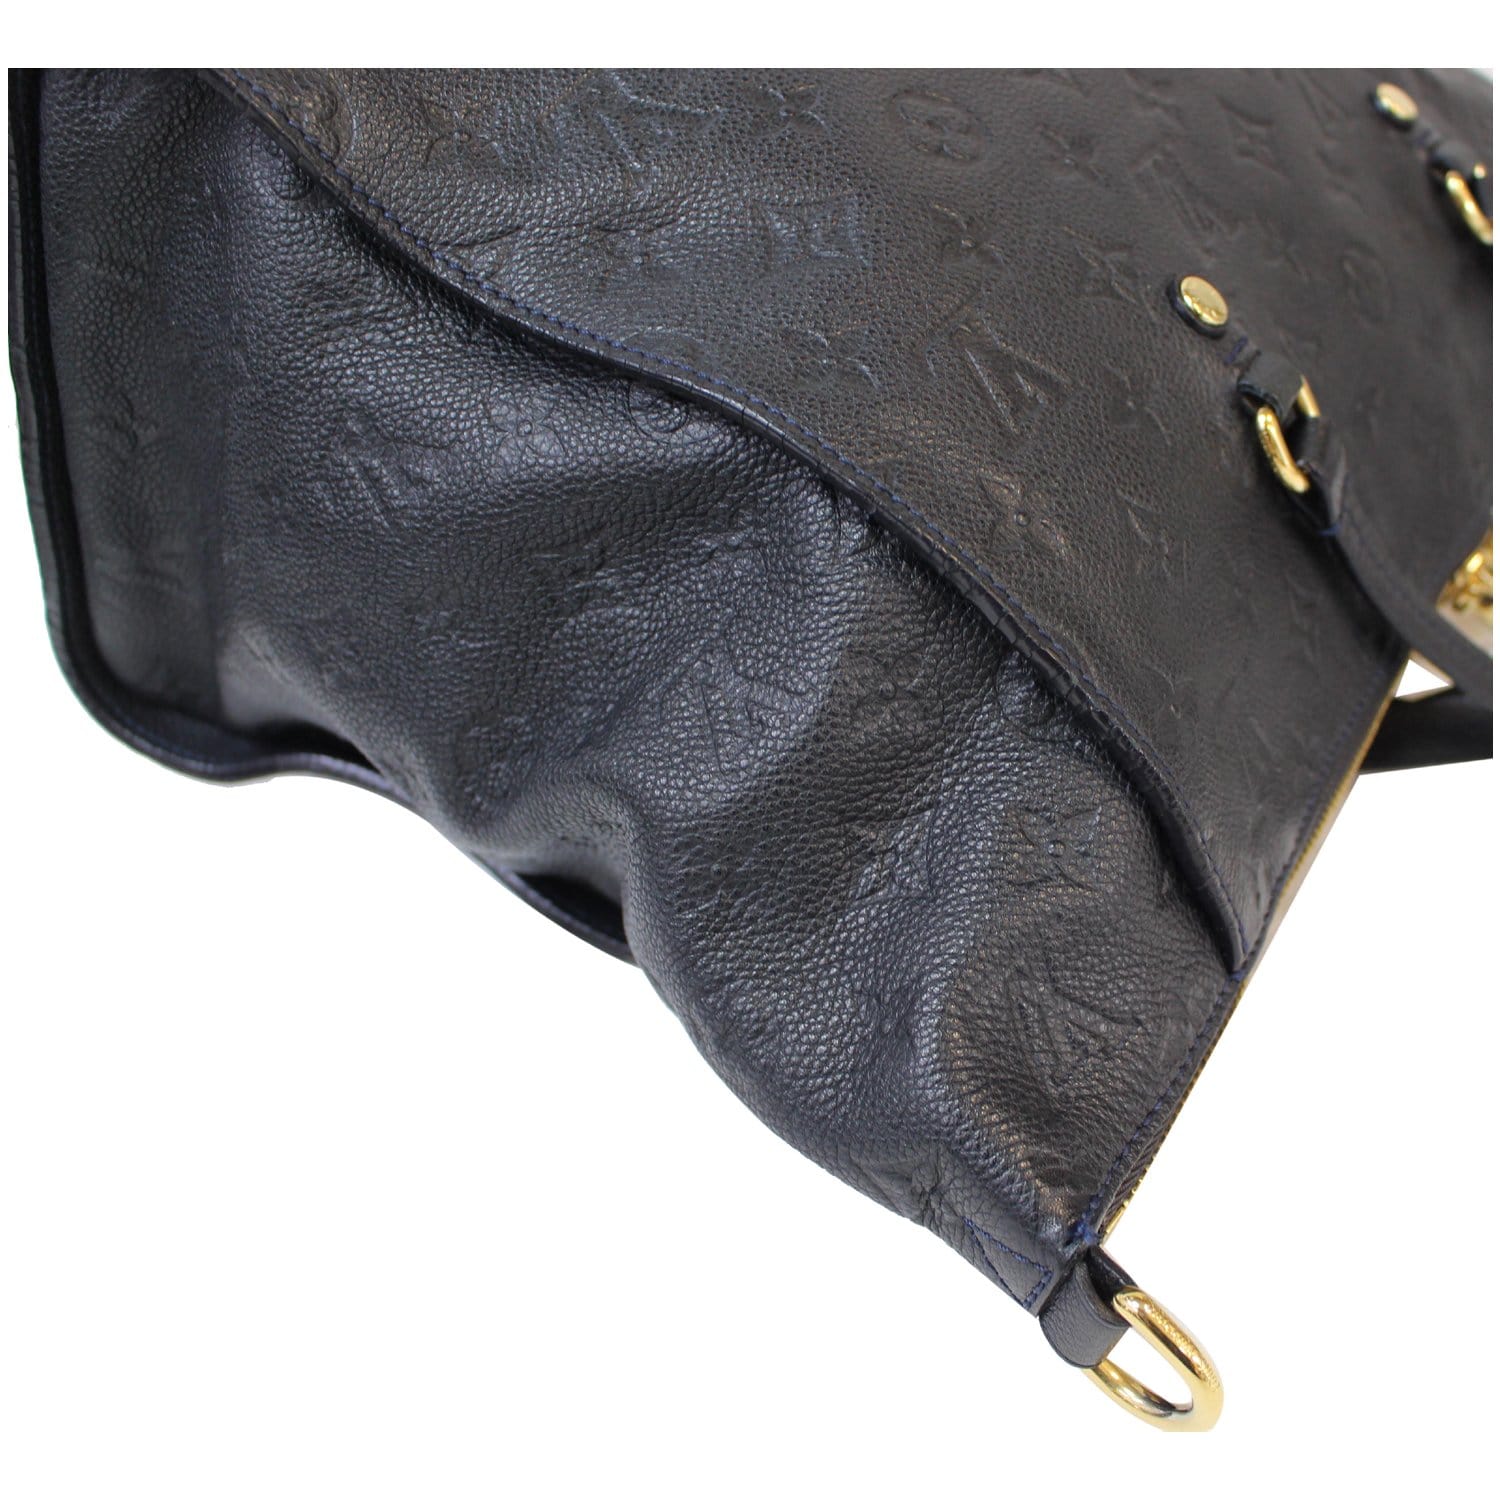 Louis Vuitton Lumineuse Leather Handbag